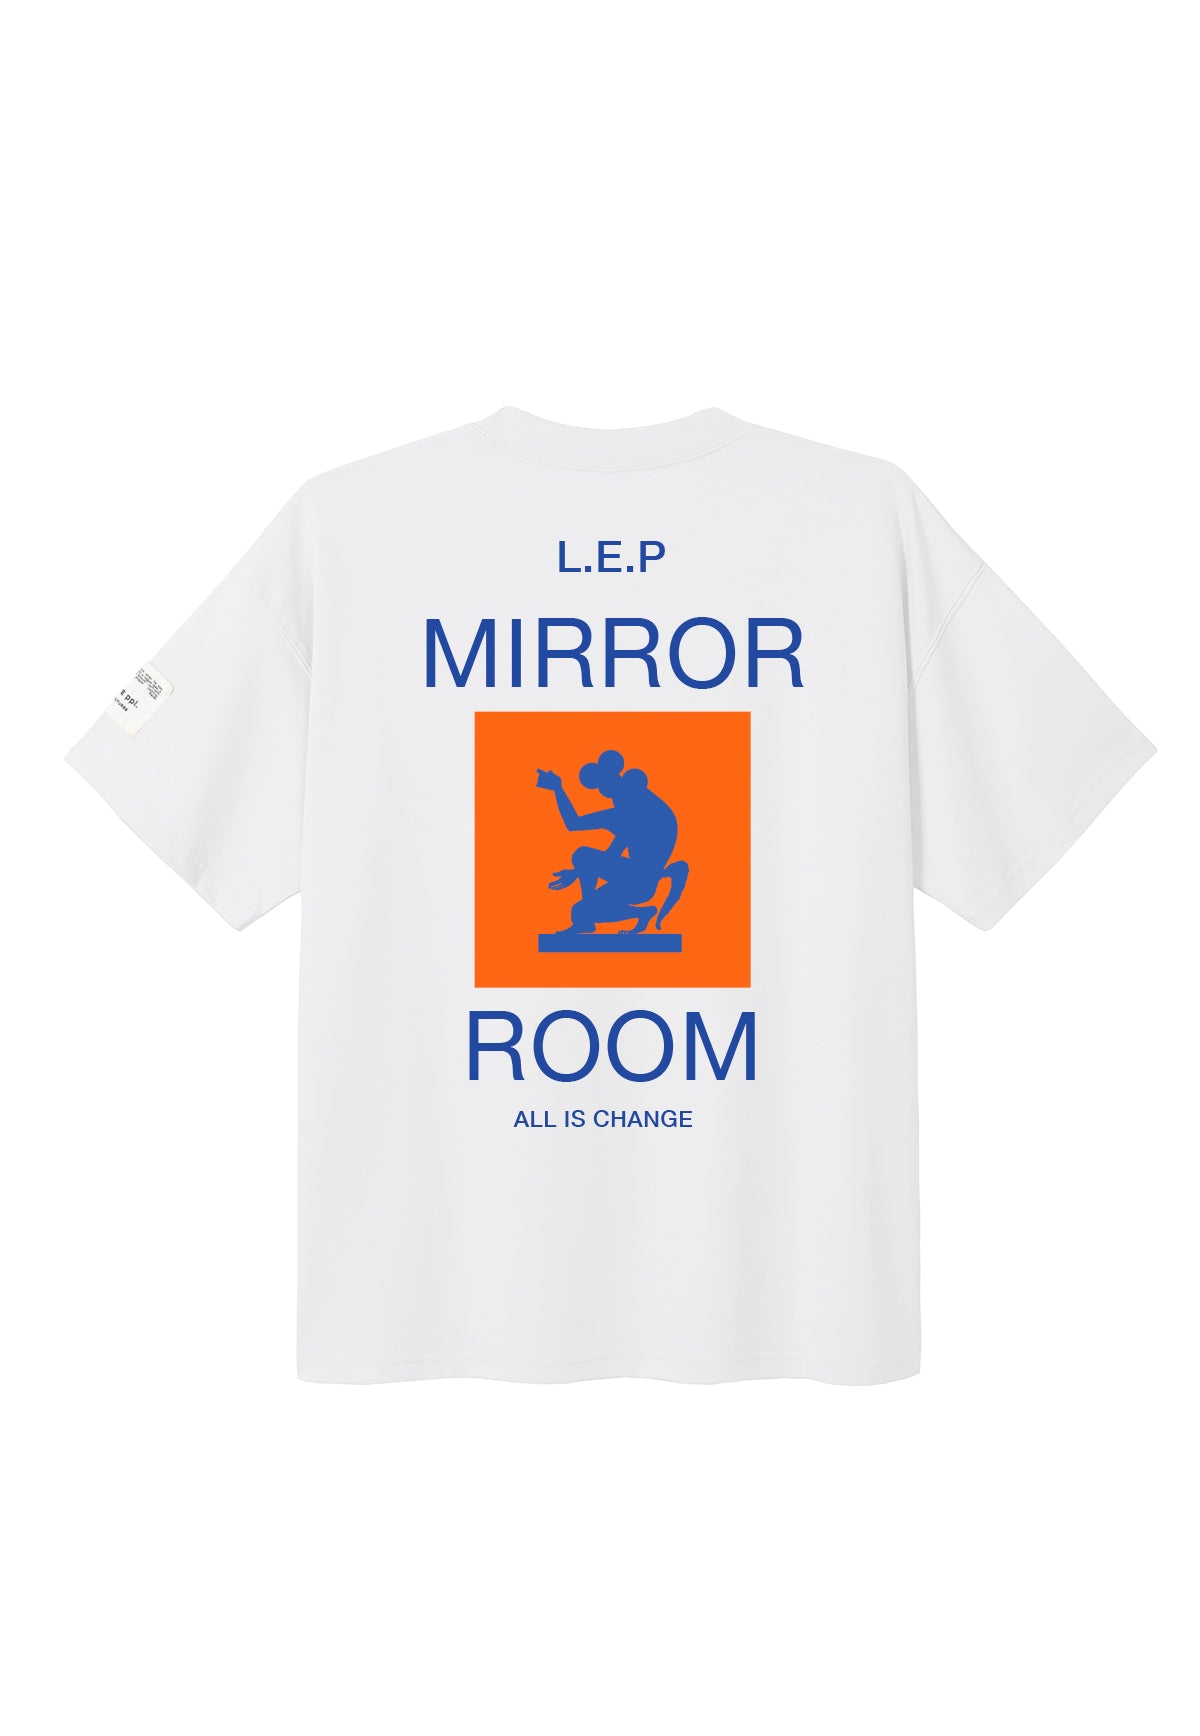 Mirror Room white